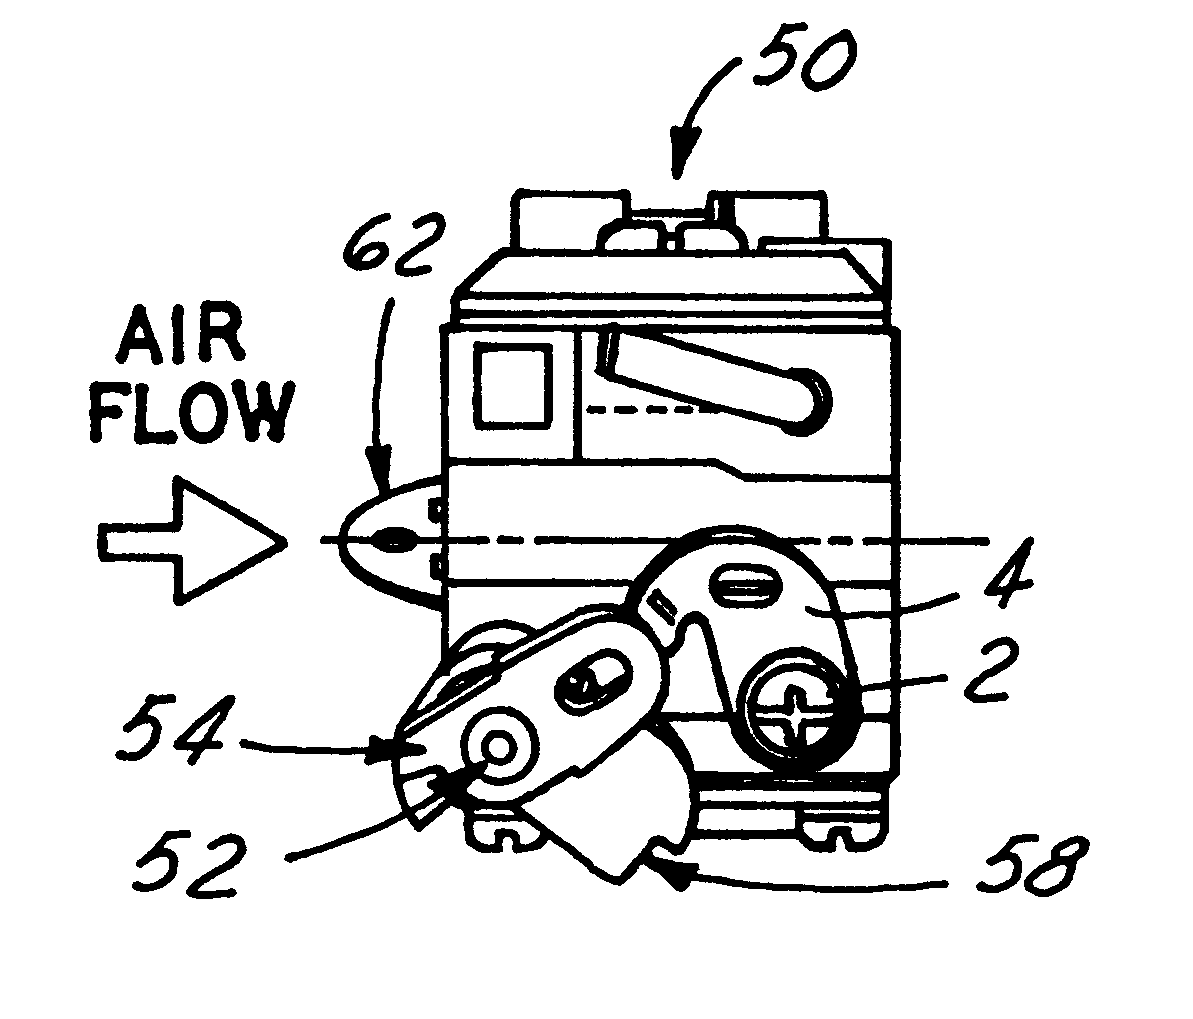 Carburetor throttle and choke control mechanism